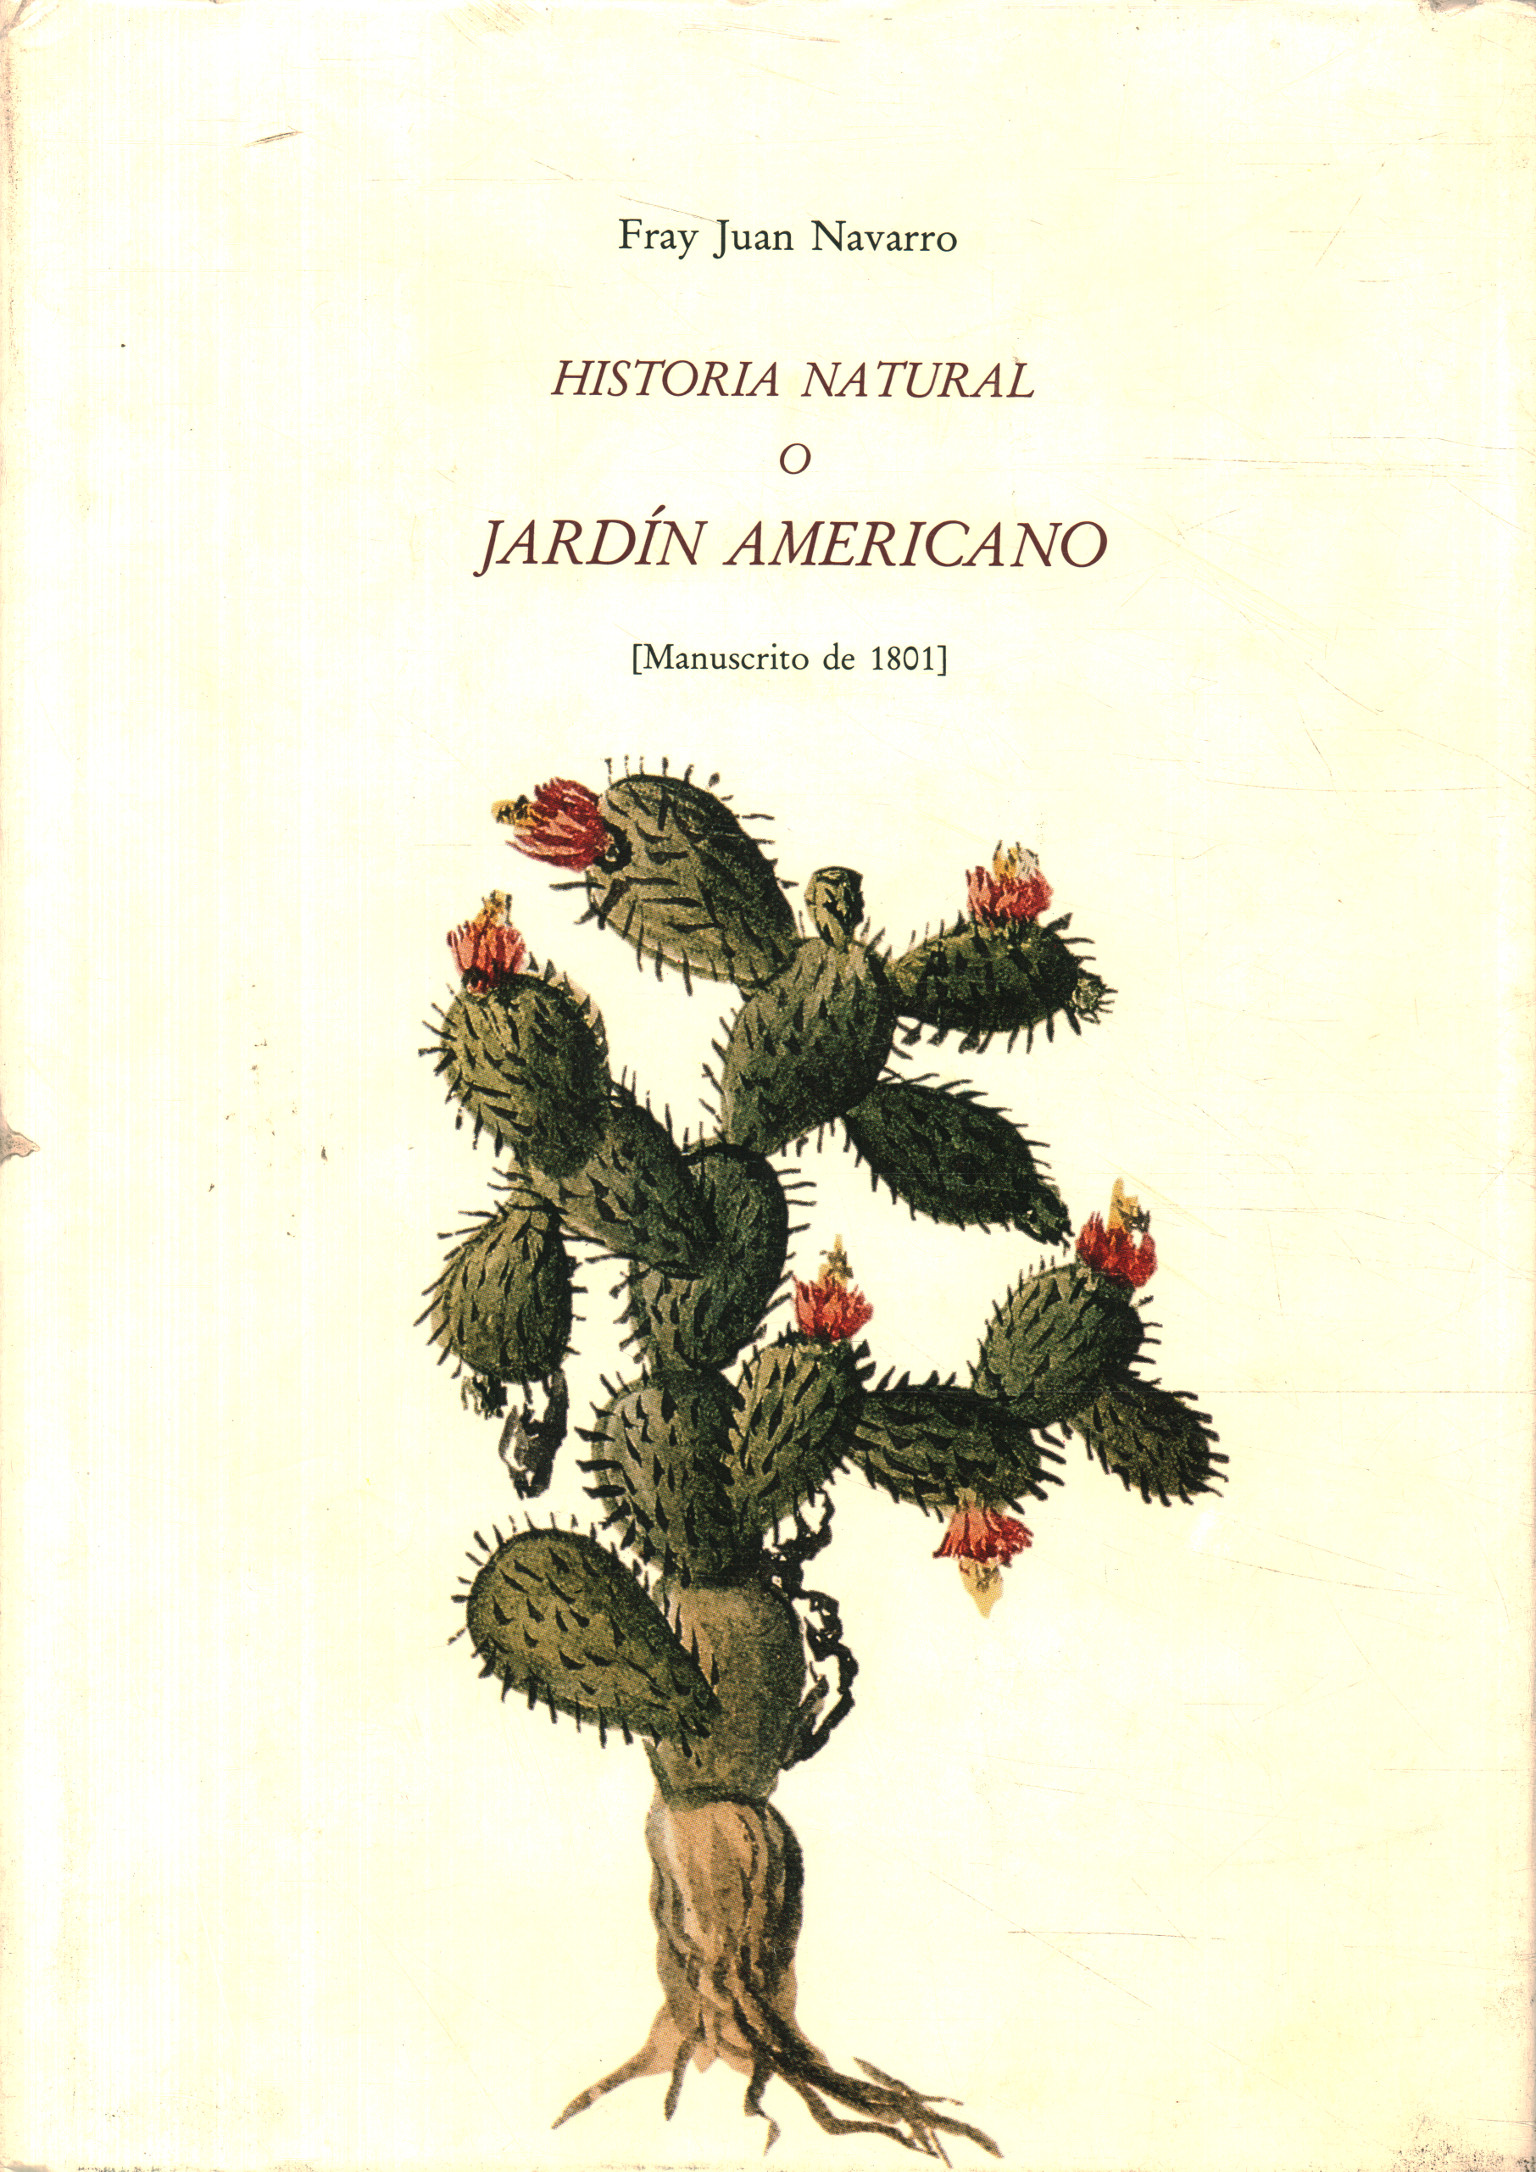 Natural history or american garden